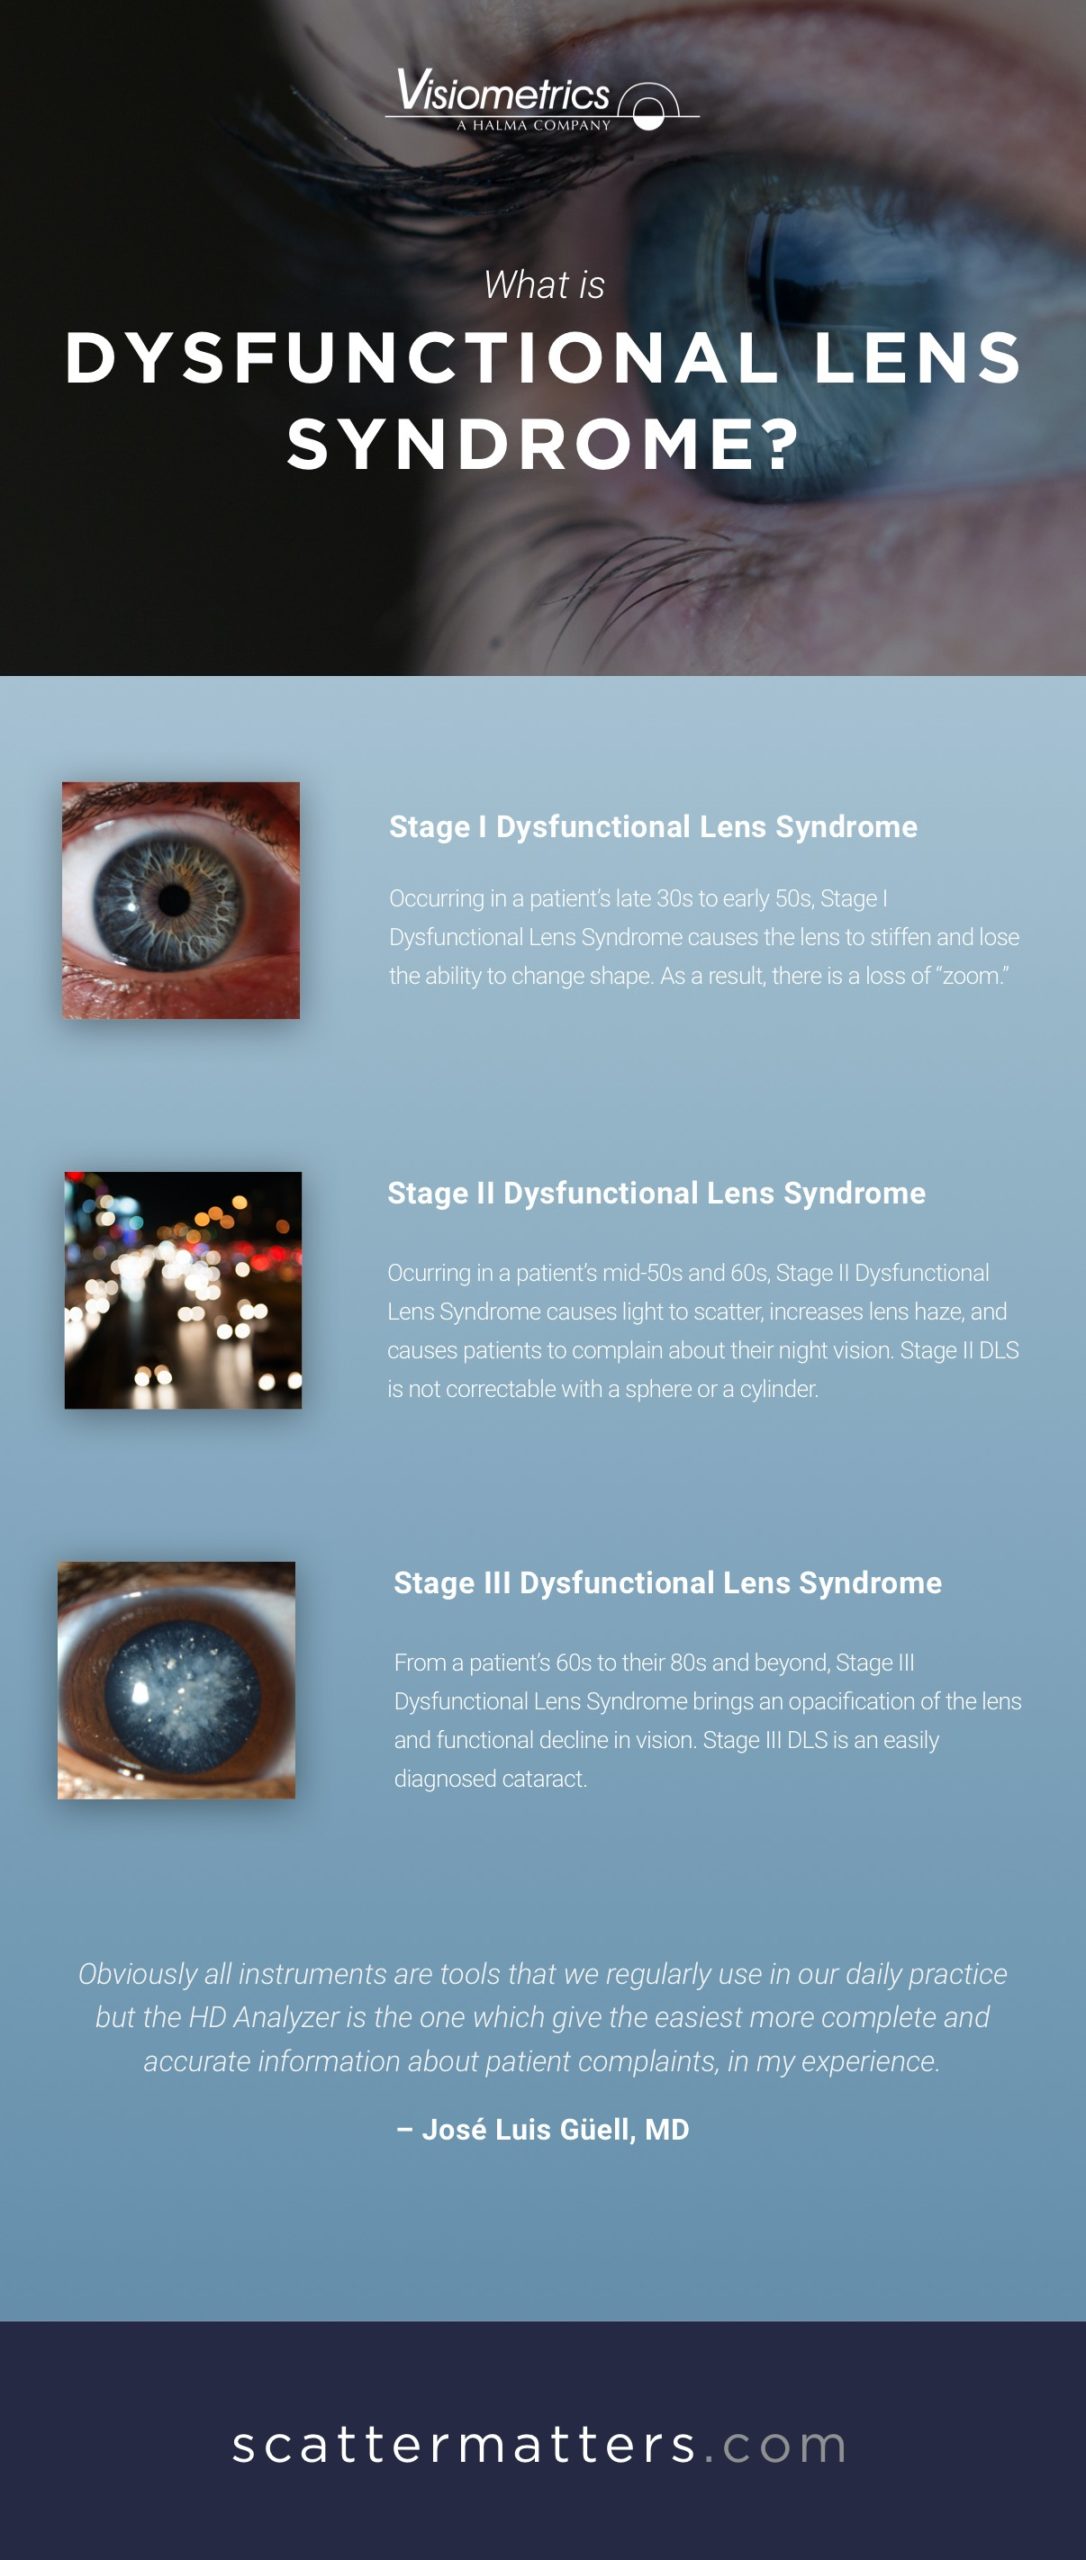 Visiometrics Dysfunctional Lens Syndrome banner